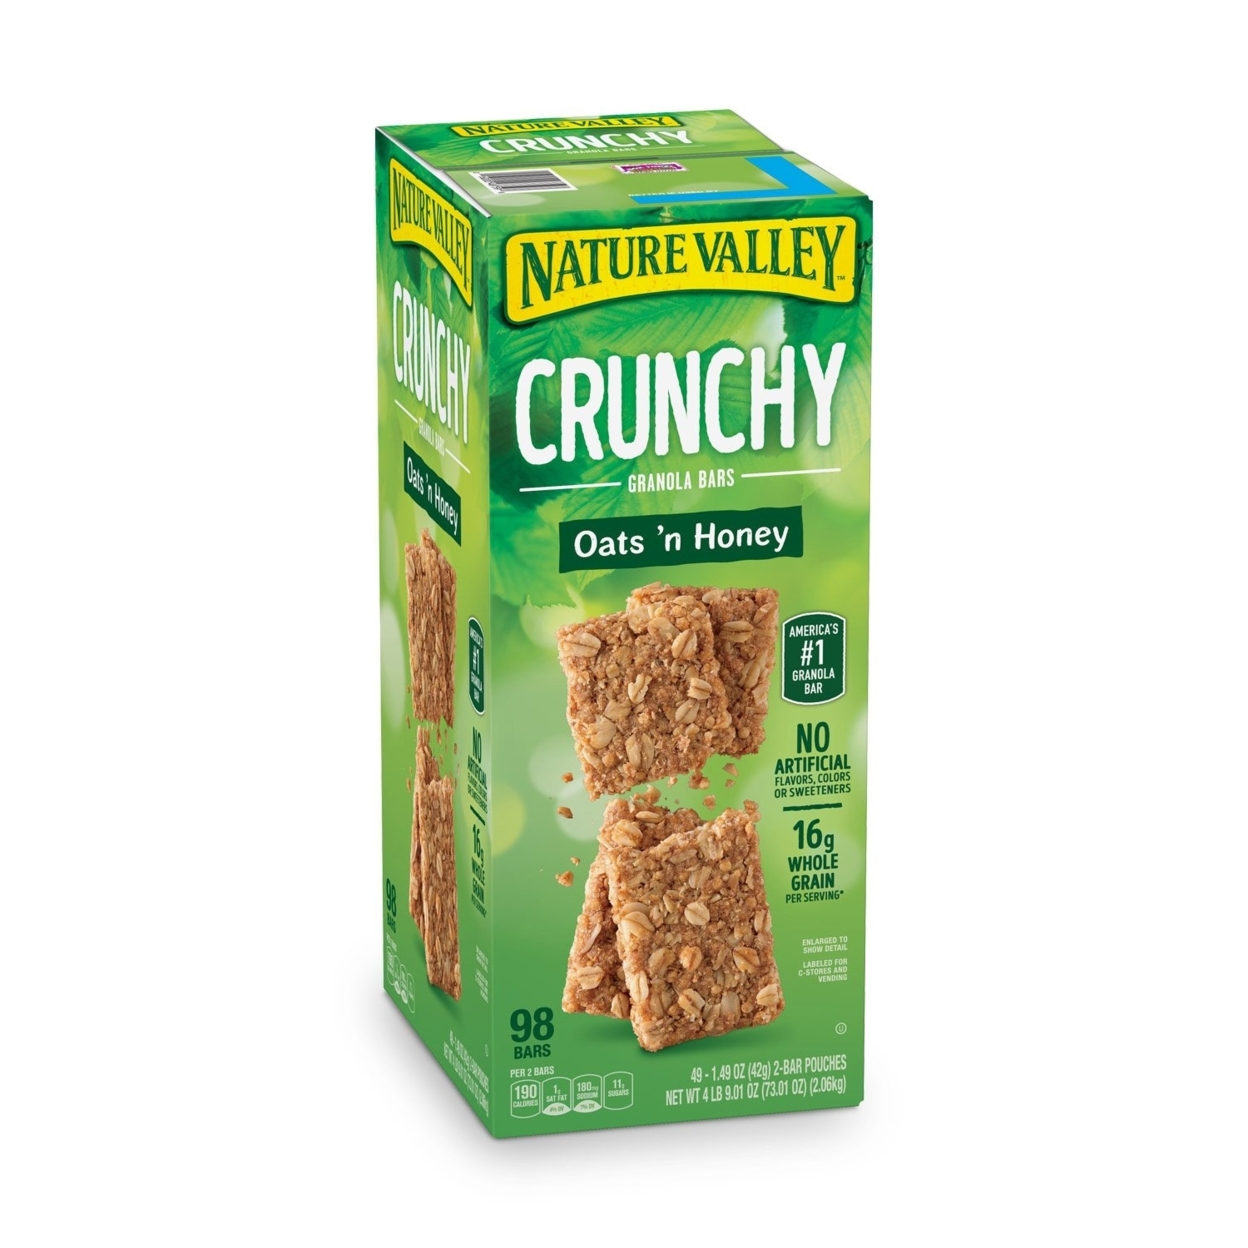 Nature Valley Crunchy Granola Bars Oats 'N Honey, 98-Count (Net Wt 4lb 9.01oz)